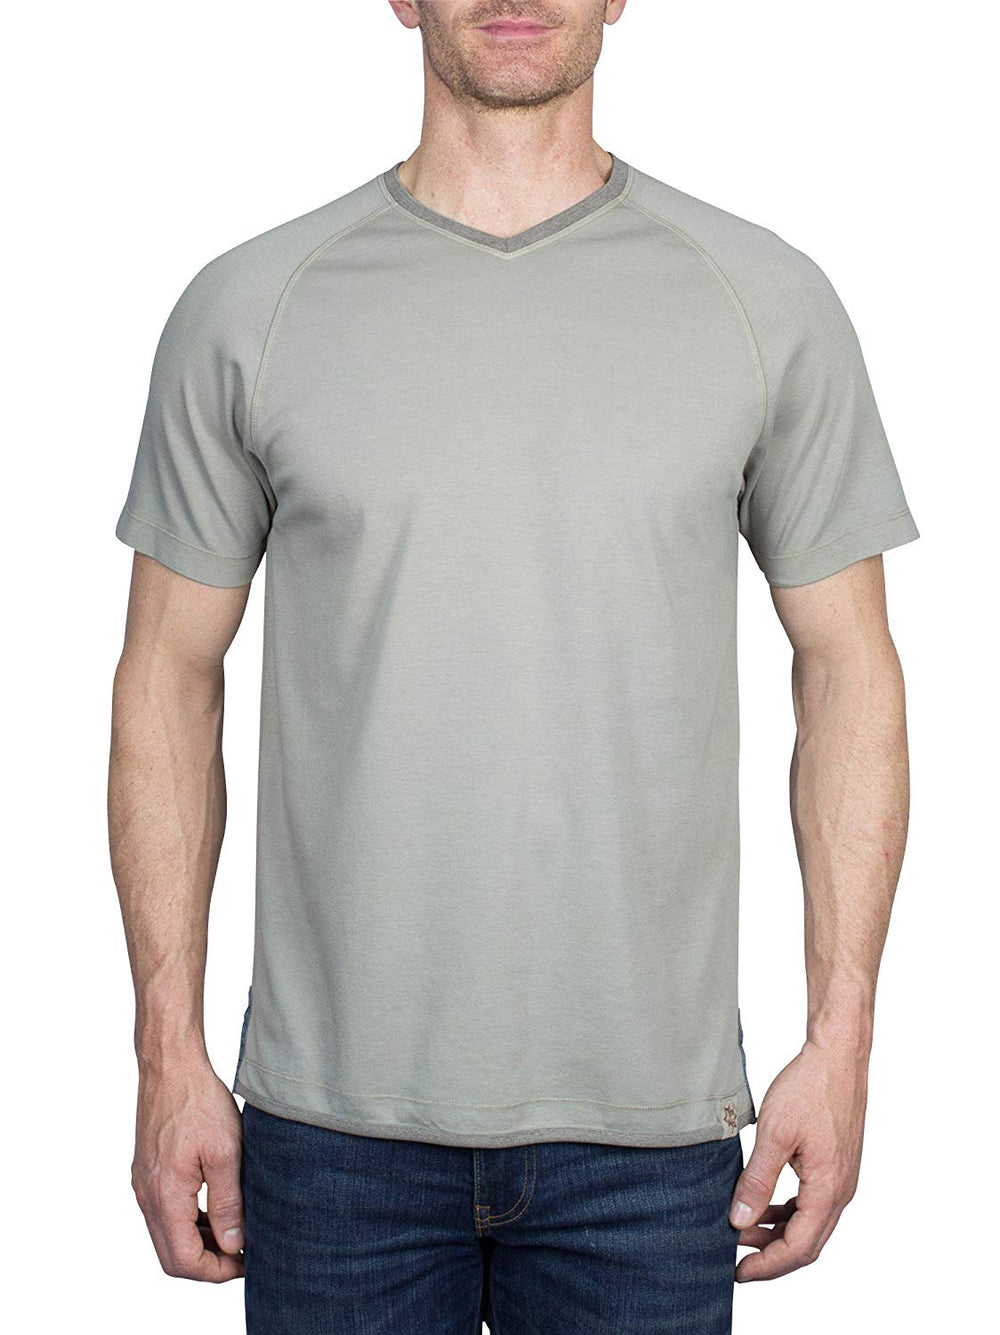 Download Thaddeus VANN Men's 100% Cotton Raglan Short Sleeve V-Neck ...